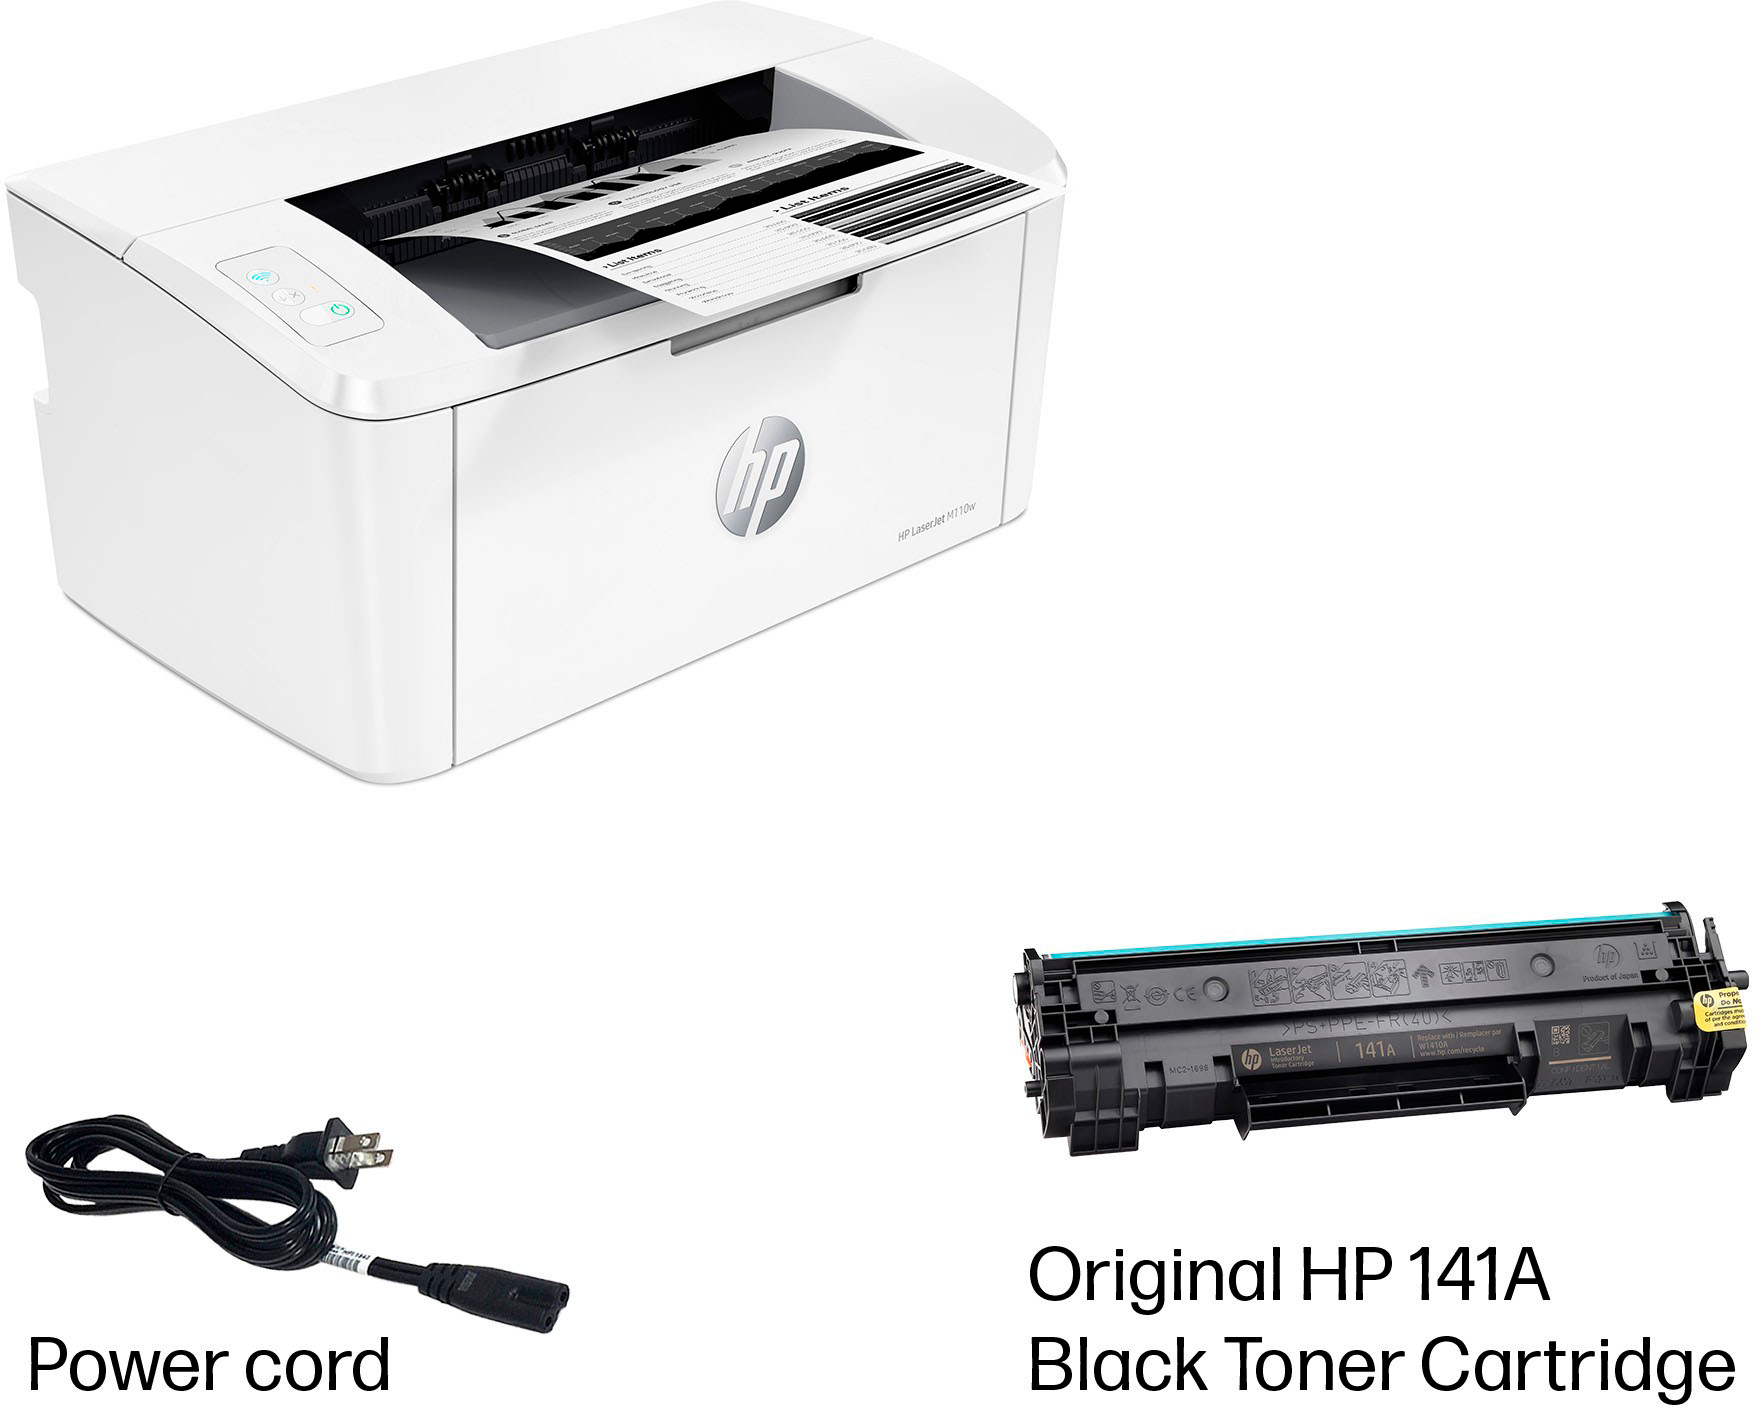 HP LaserJet M110w Wireless Printer Buy Black Best M110w LaserJet and White White - Laser